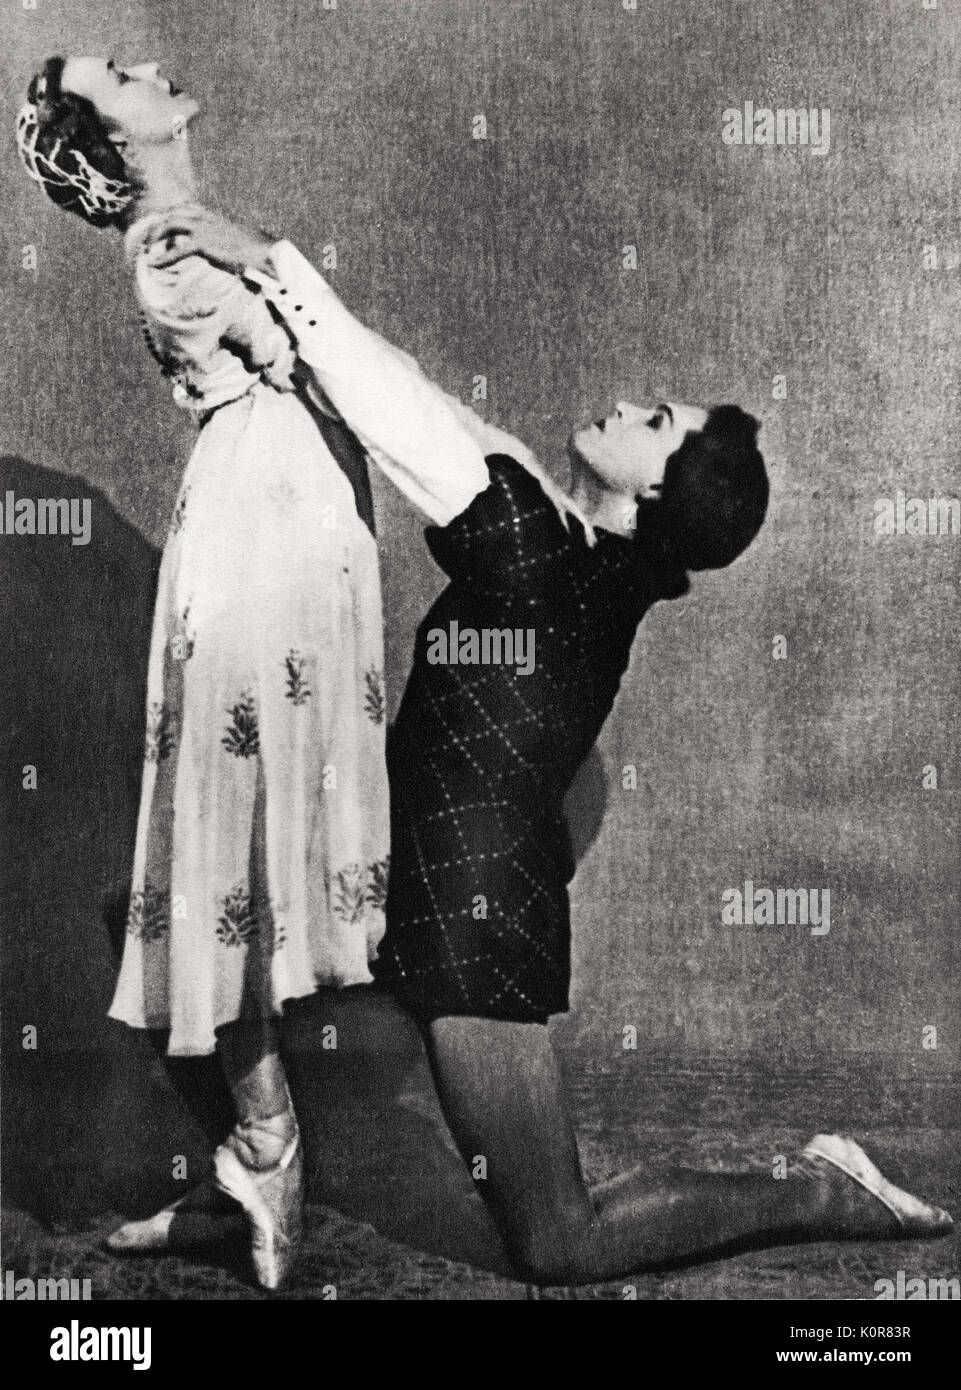 Galina Ulanova and Sergeyev in Sergei Prokofiev 's ballet  'Romeo and Juliet' for the 1940 premiere Kirov, Leningrad -   Russian composer   (1891 - 1953). GU: 8 January 1910 - 21 March 1998. Stock Photo